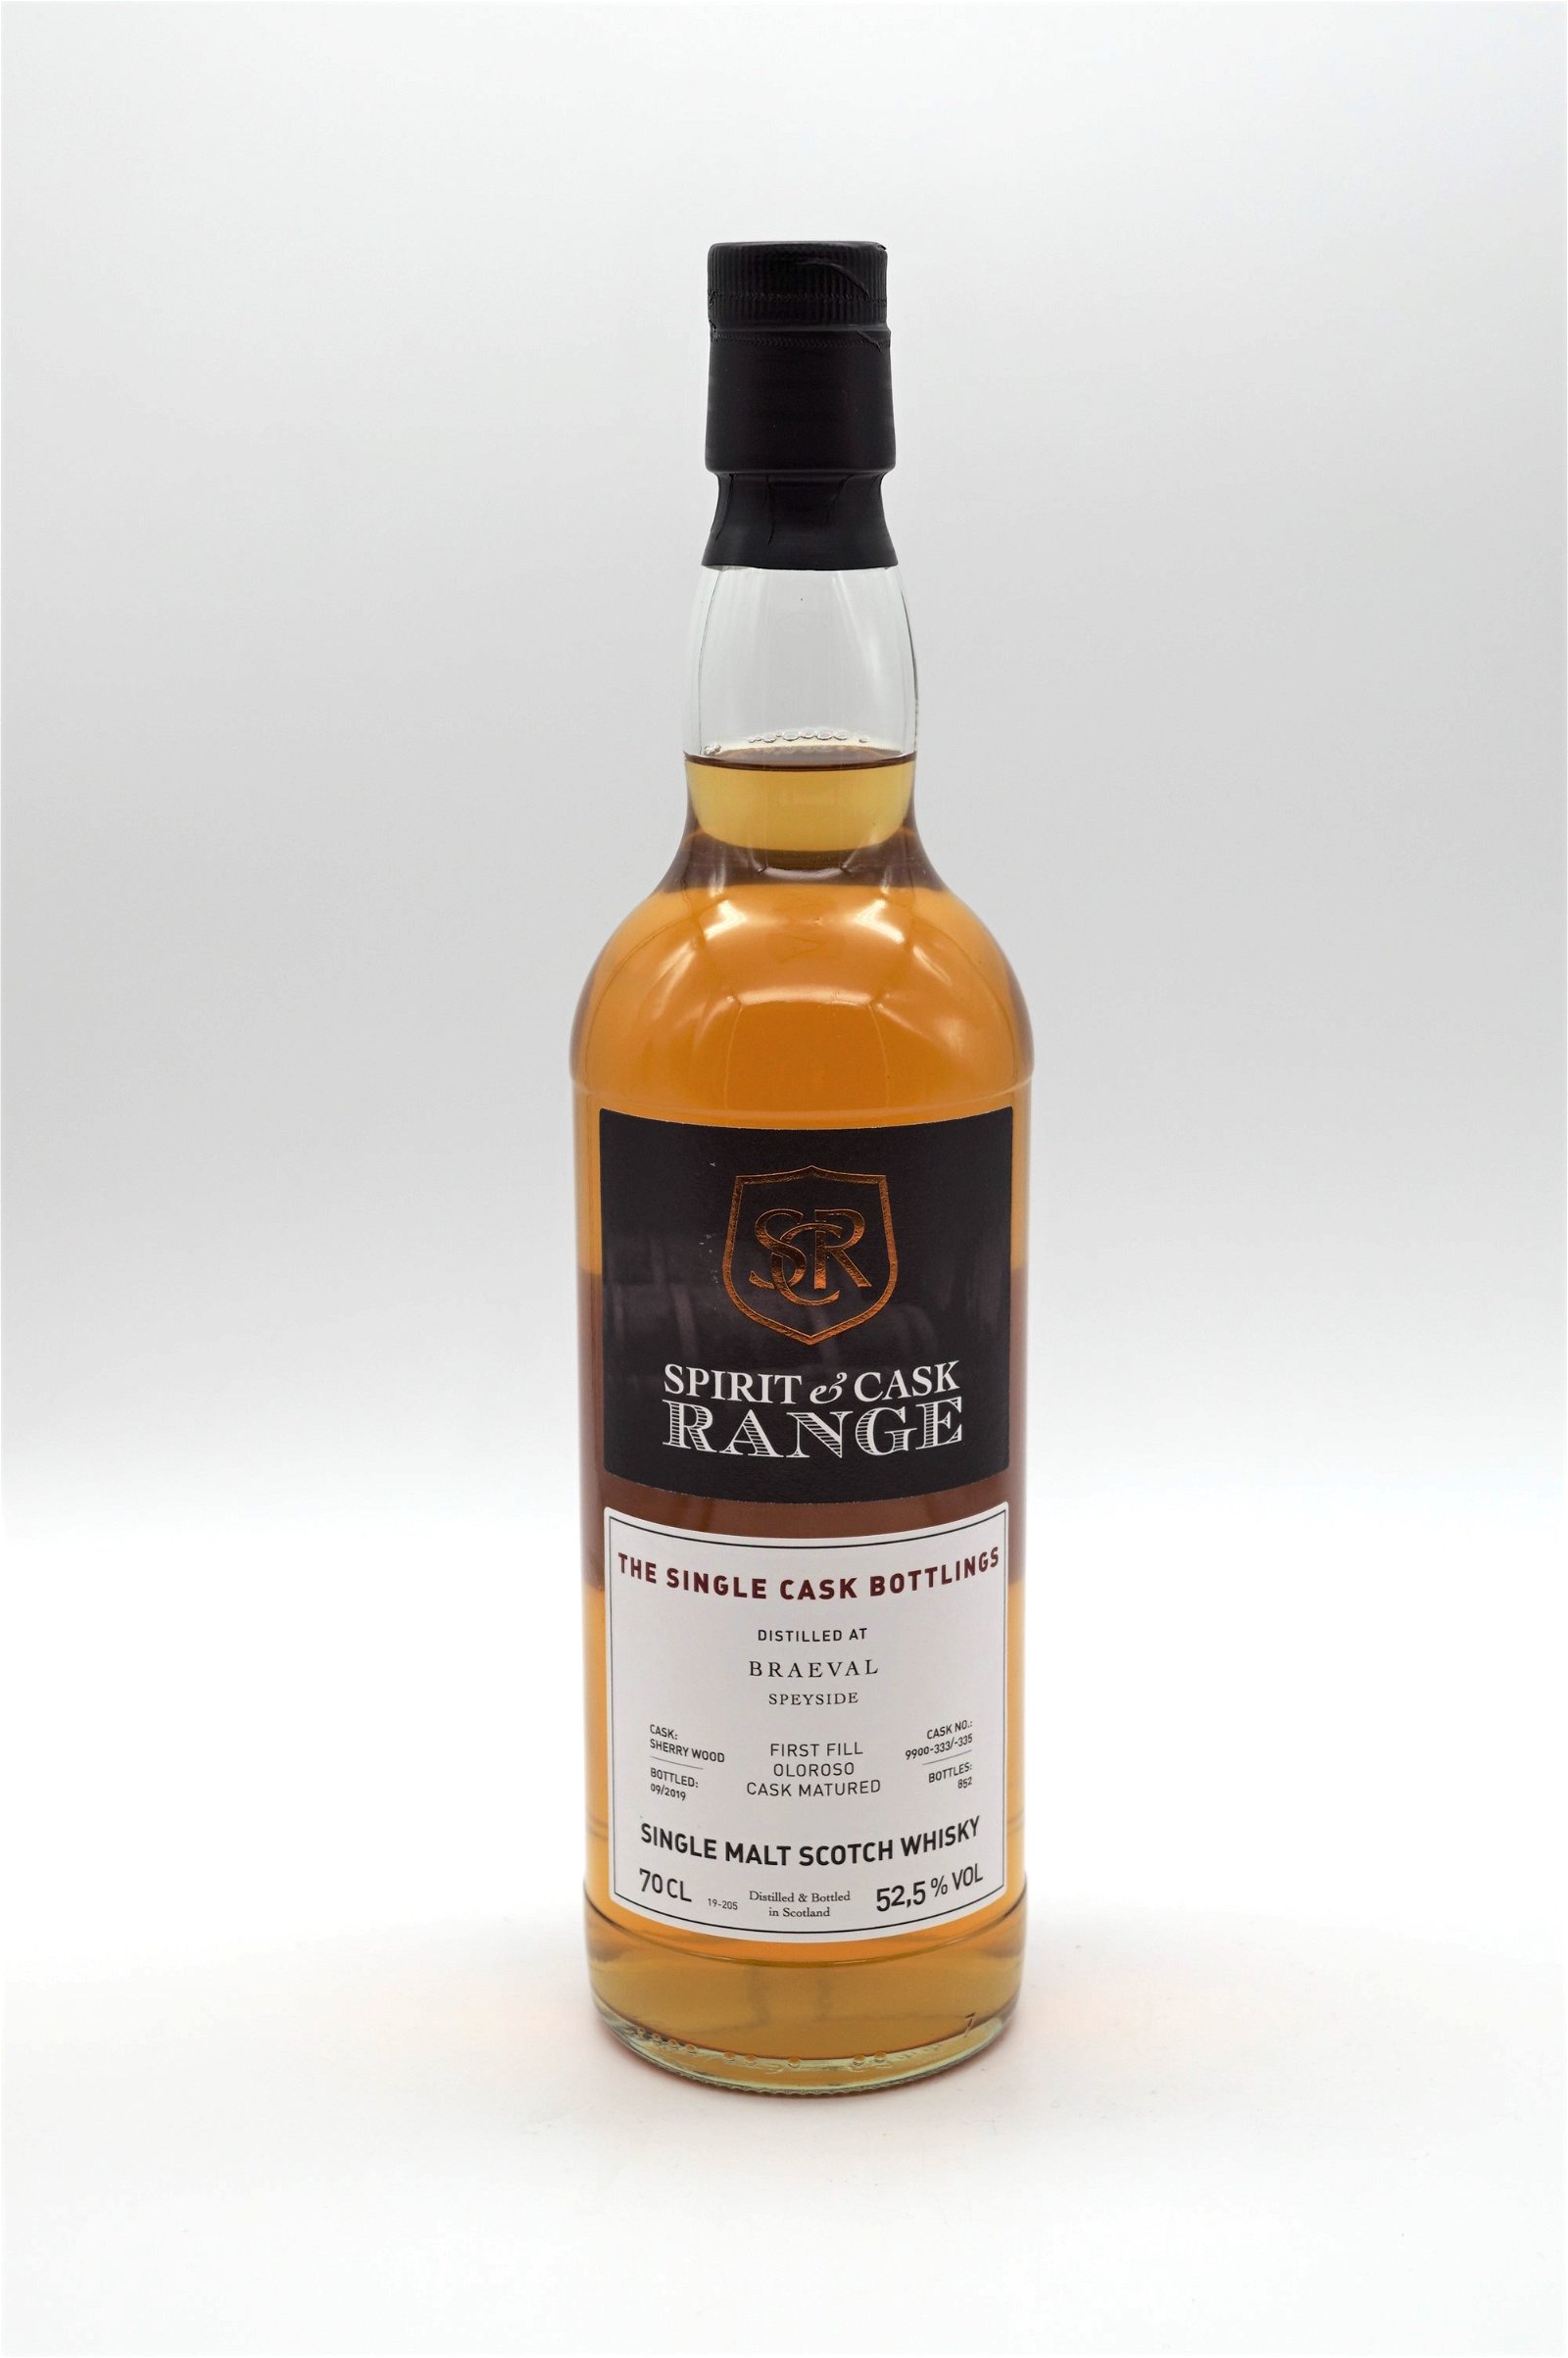 Spirit & Cask Range First Fill Oloroso Cask Matured Single Malt Scotch Whisky